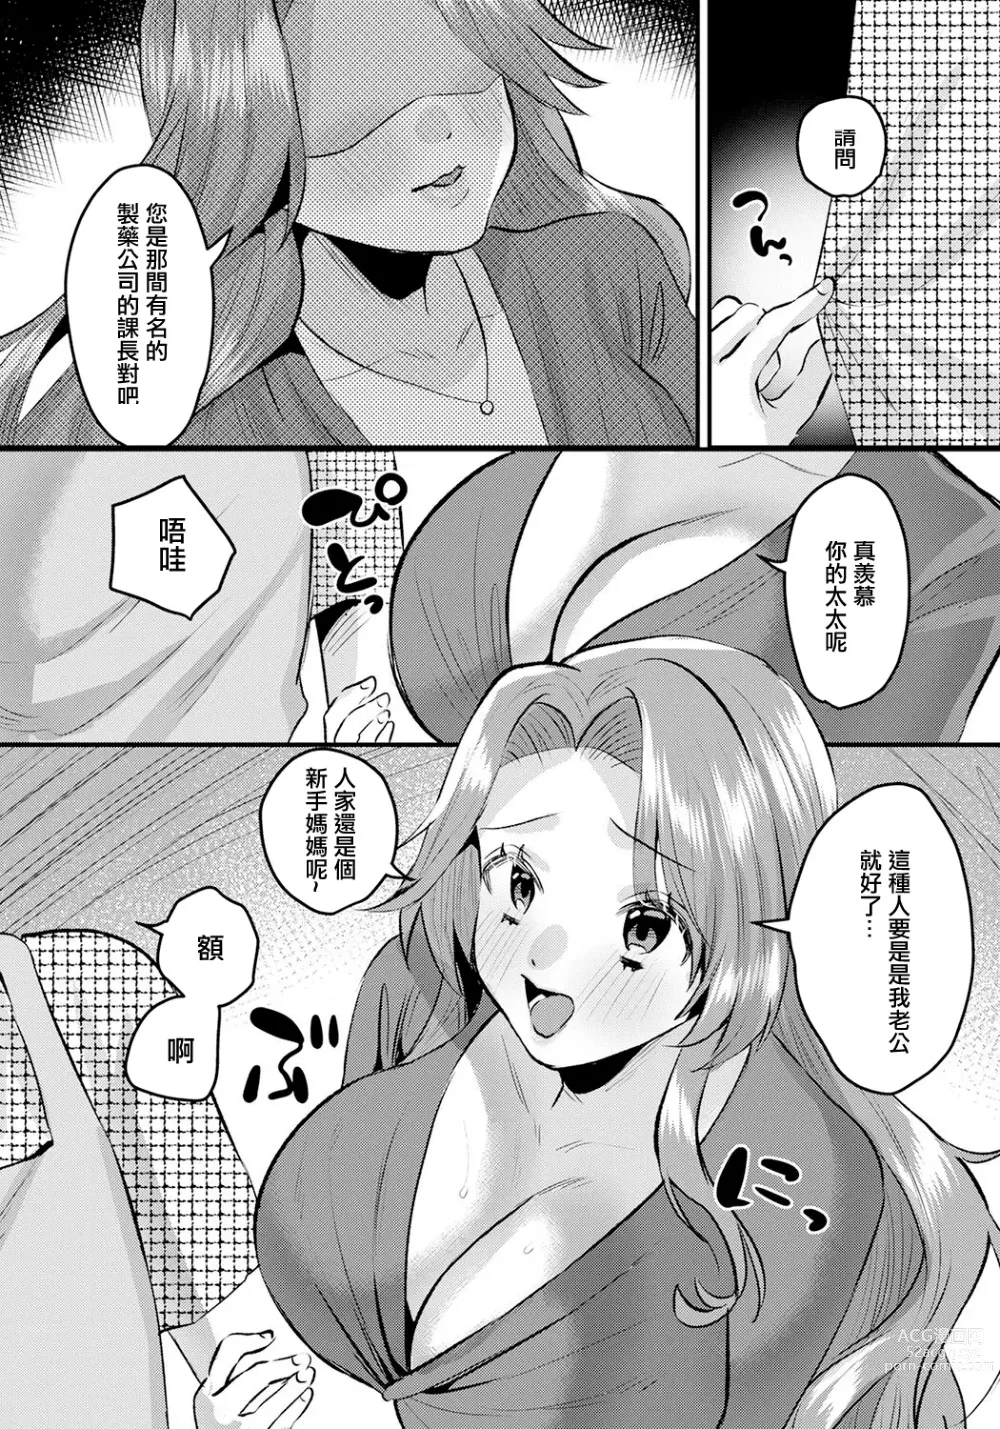 Page 3 of manga 媽媽友的甜美誘惑